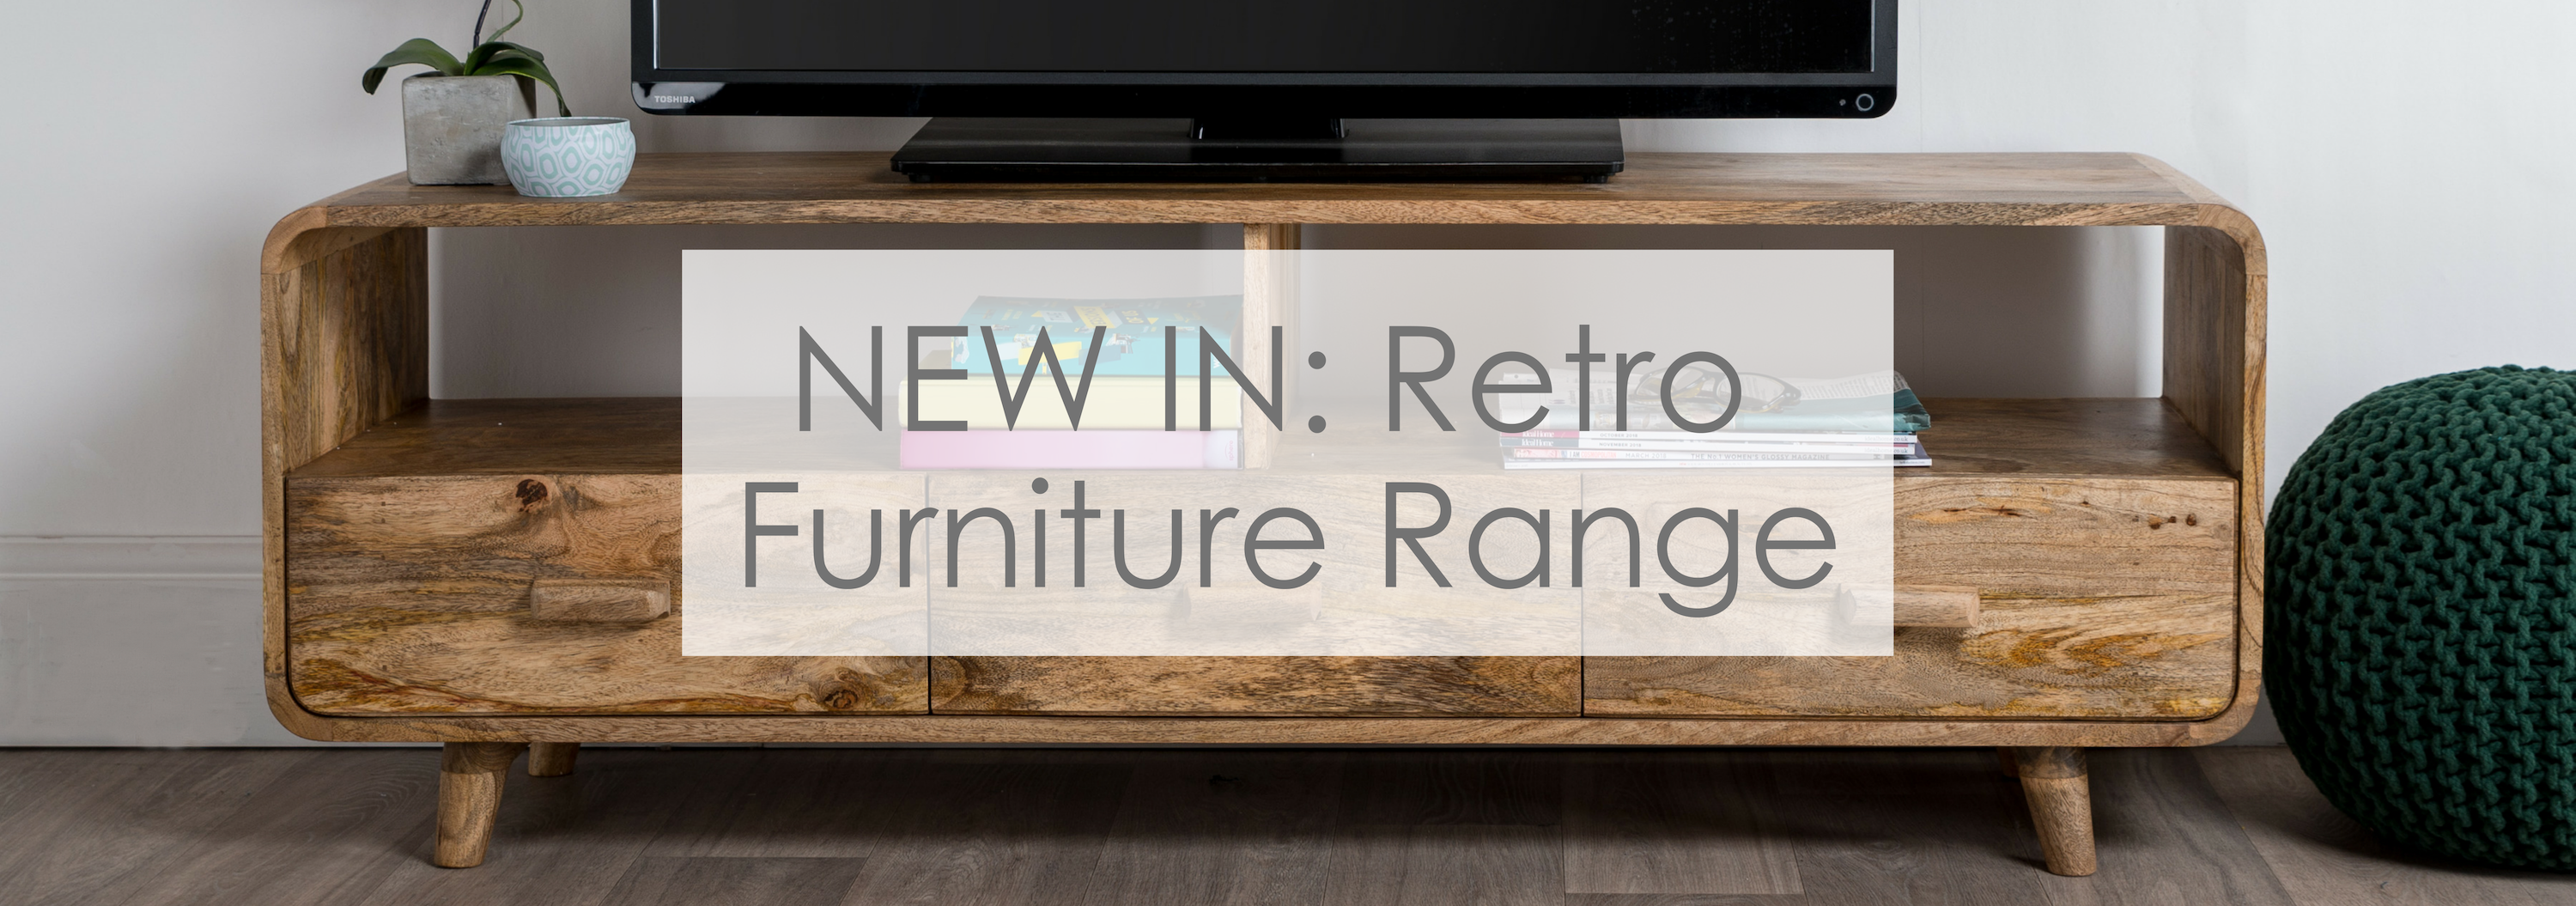 Retro furniture blog banner